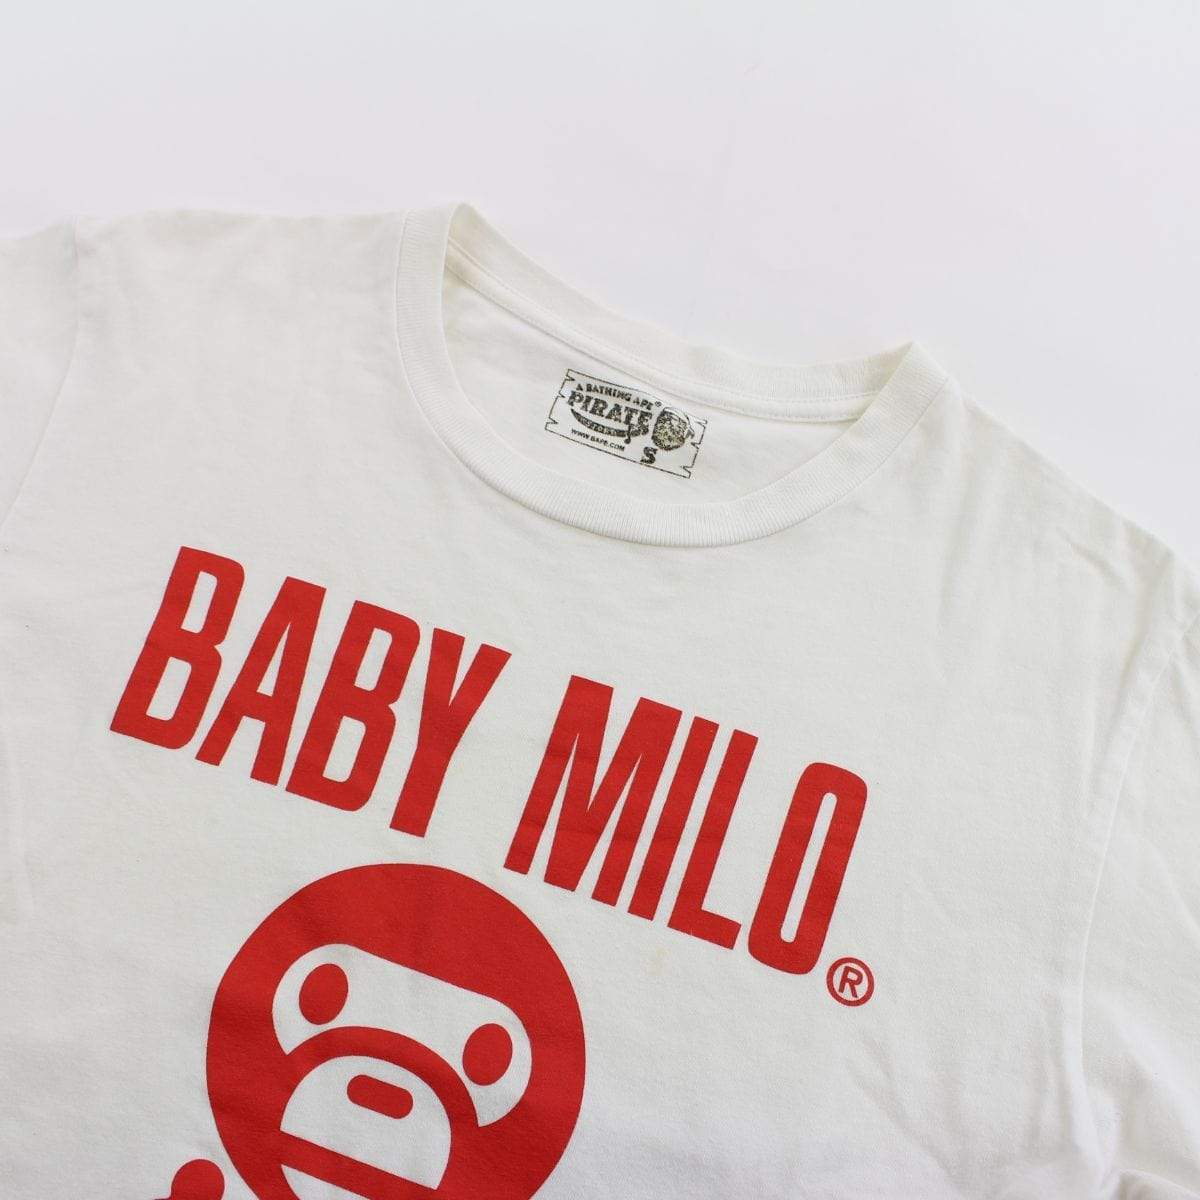 Bape Baby Milo Red Crossbones Tee White - SaruGeneral